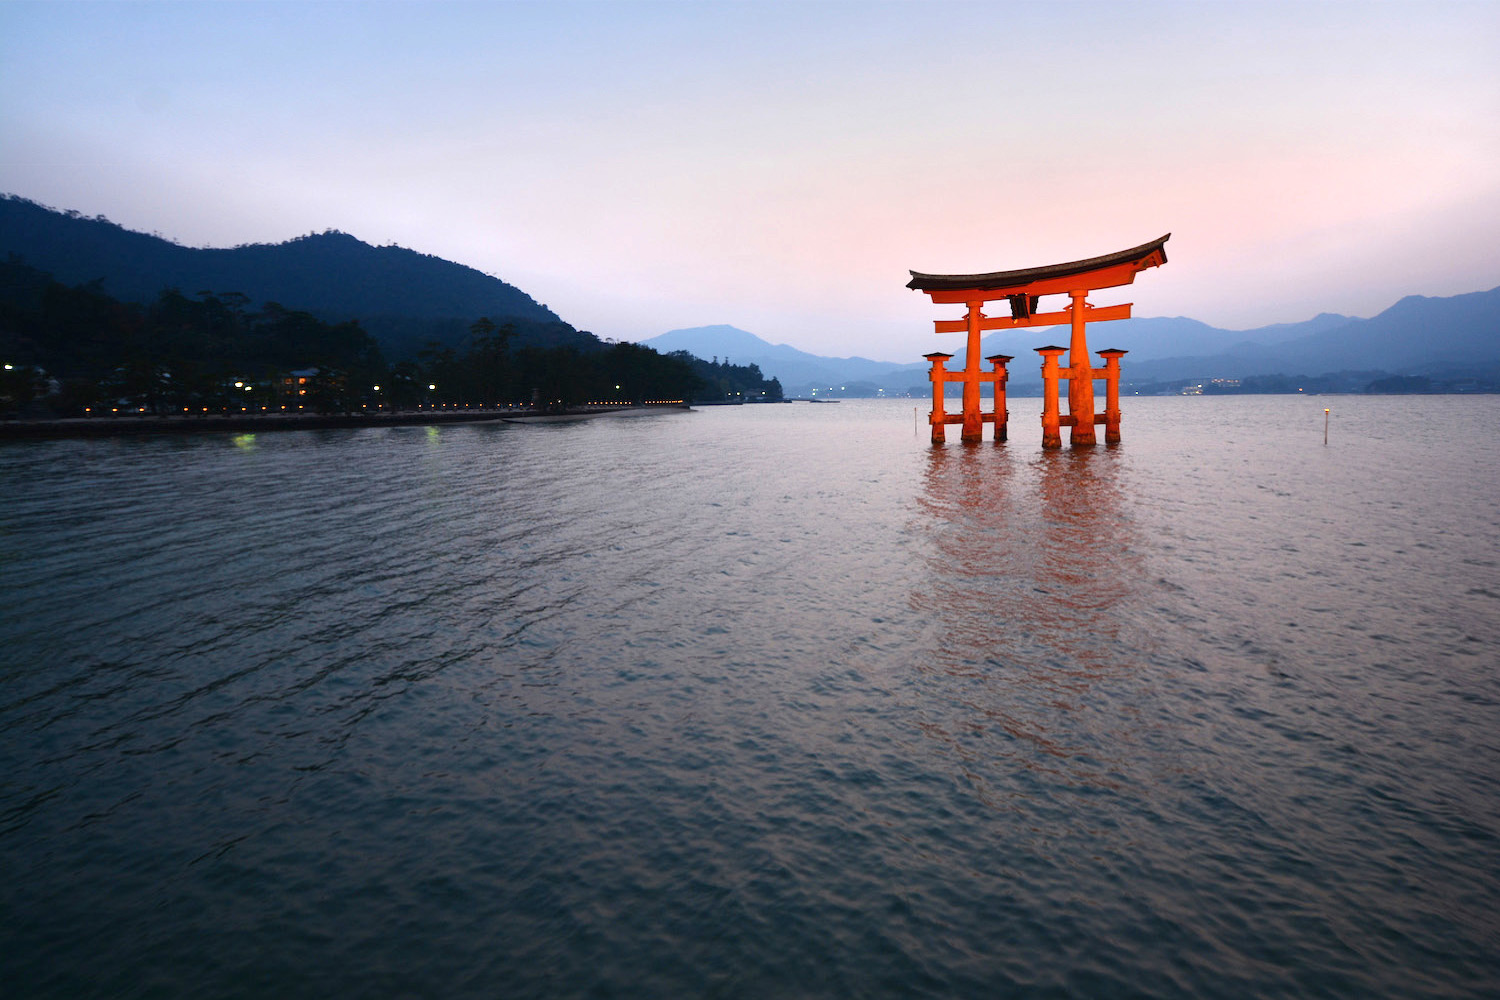 Floating Gate in Miyajima, Japan